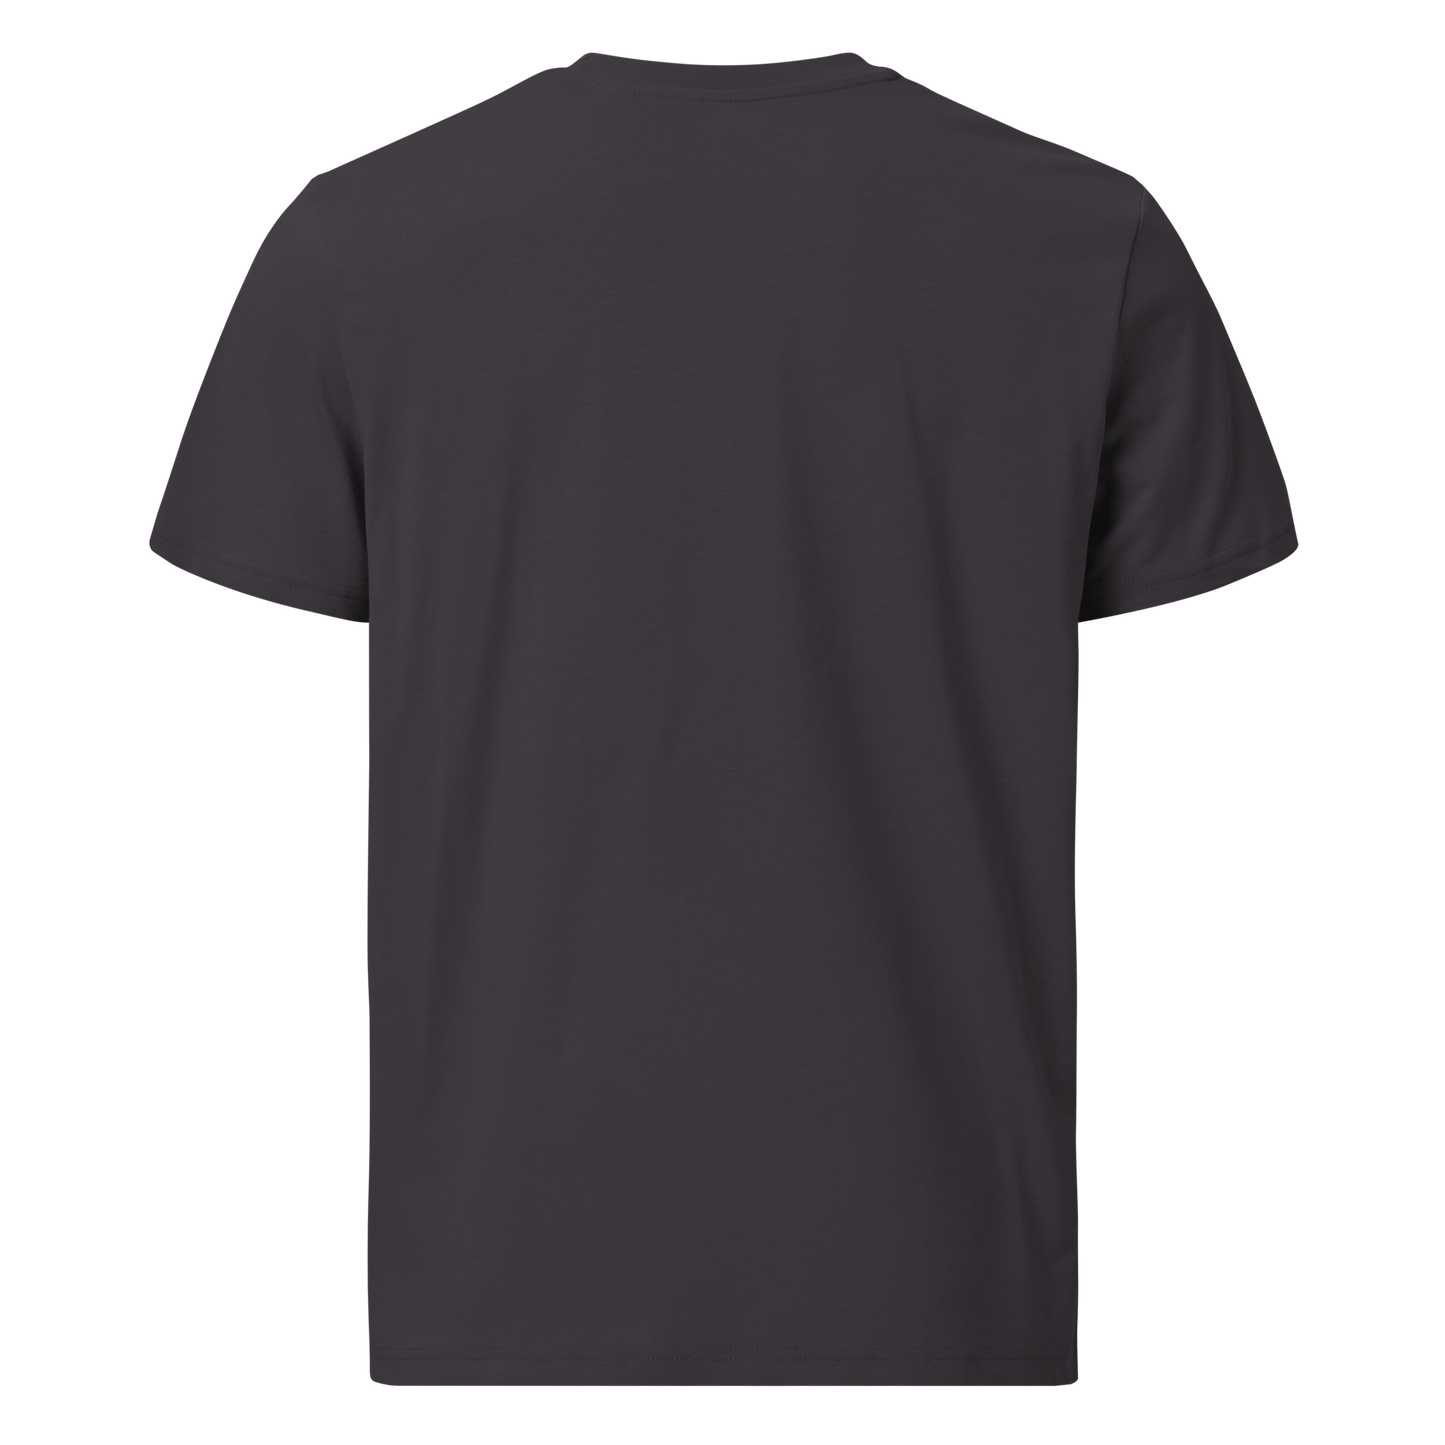 Bønita Unisex T-shirt - Dark Grey